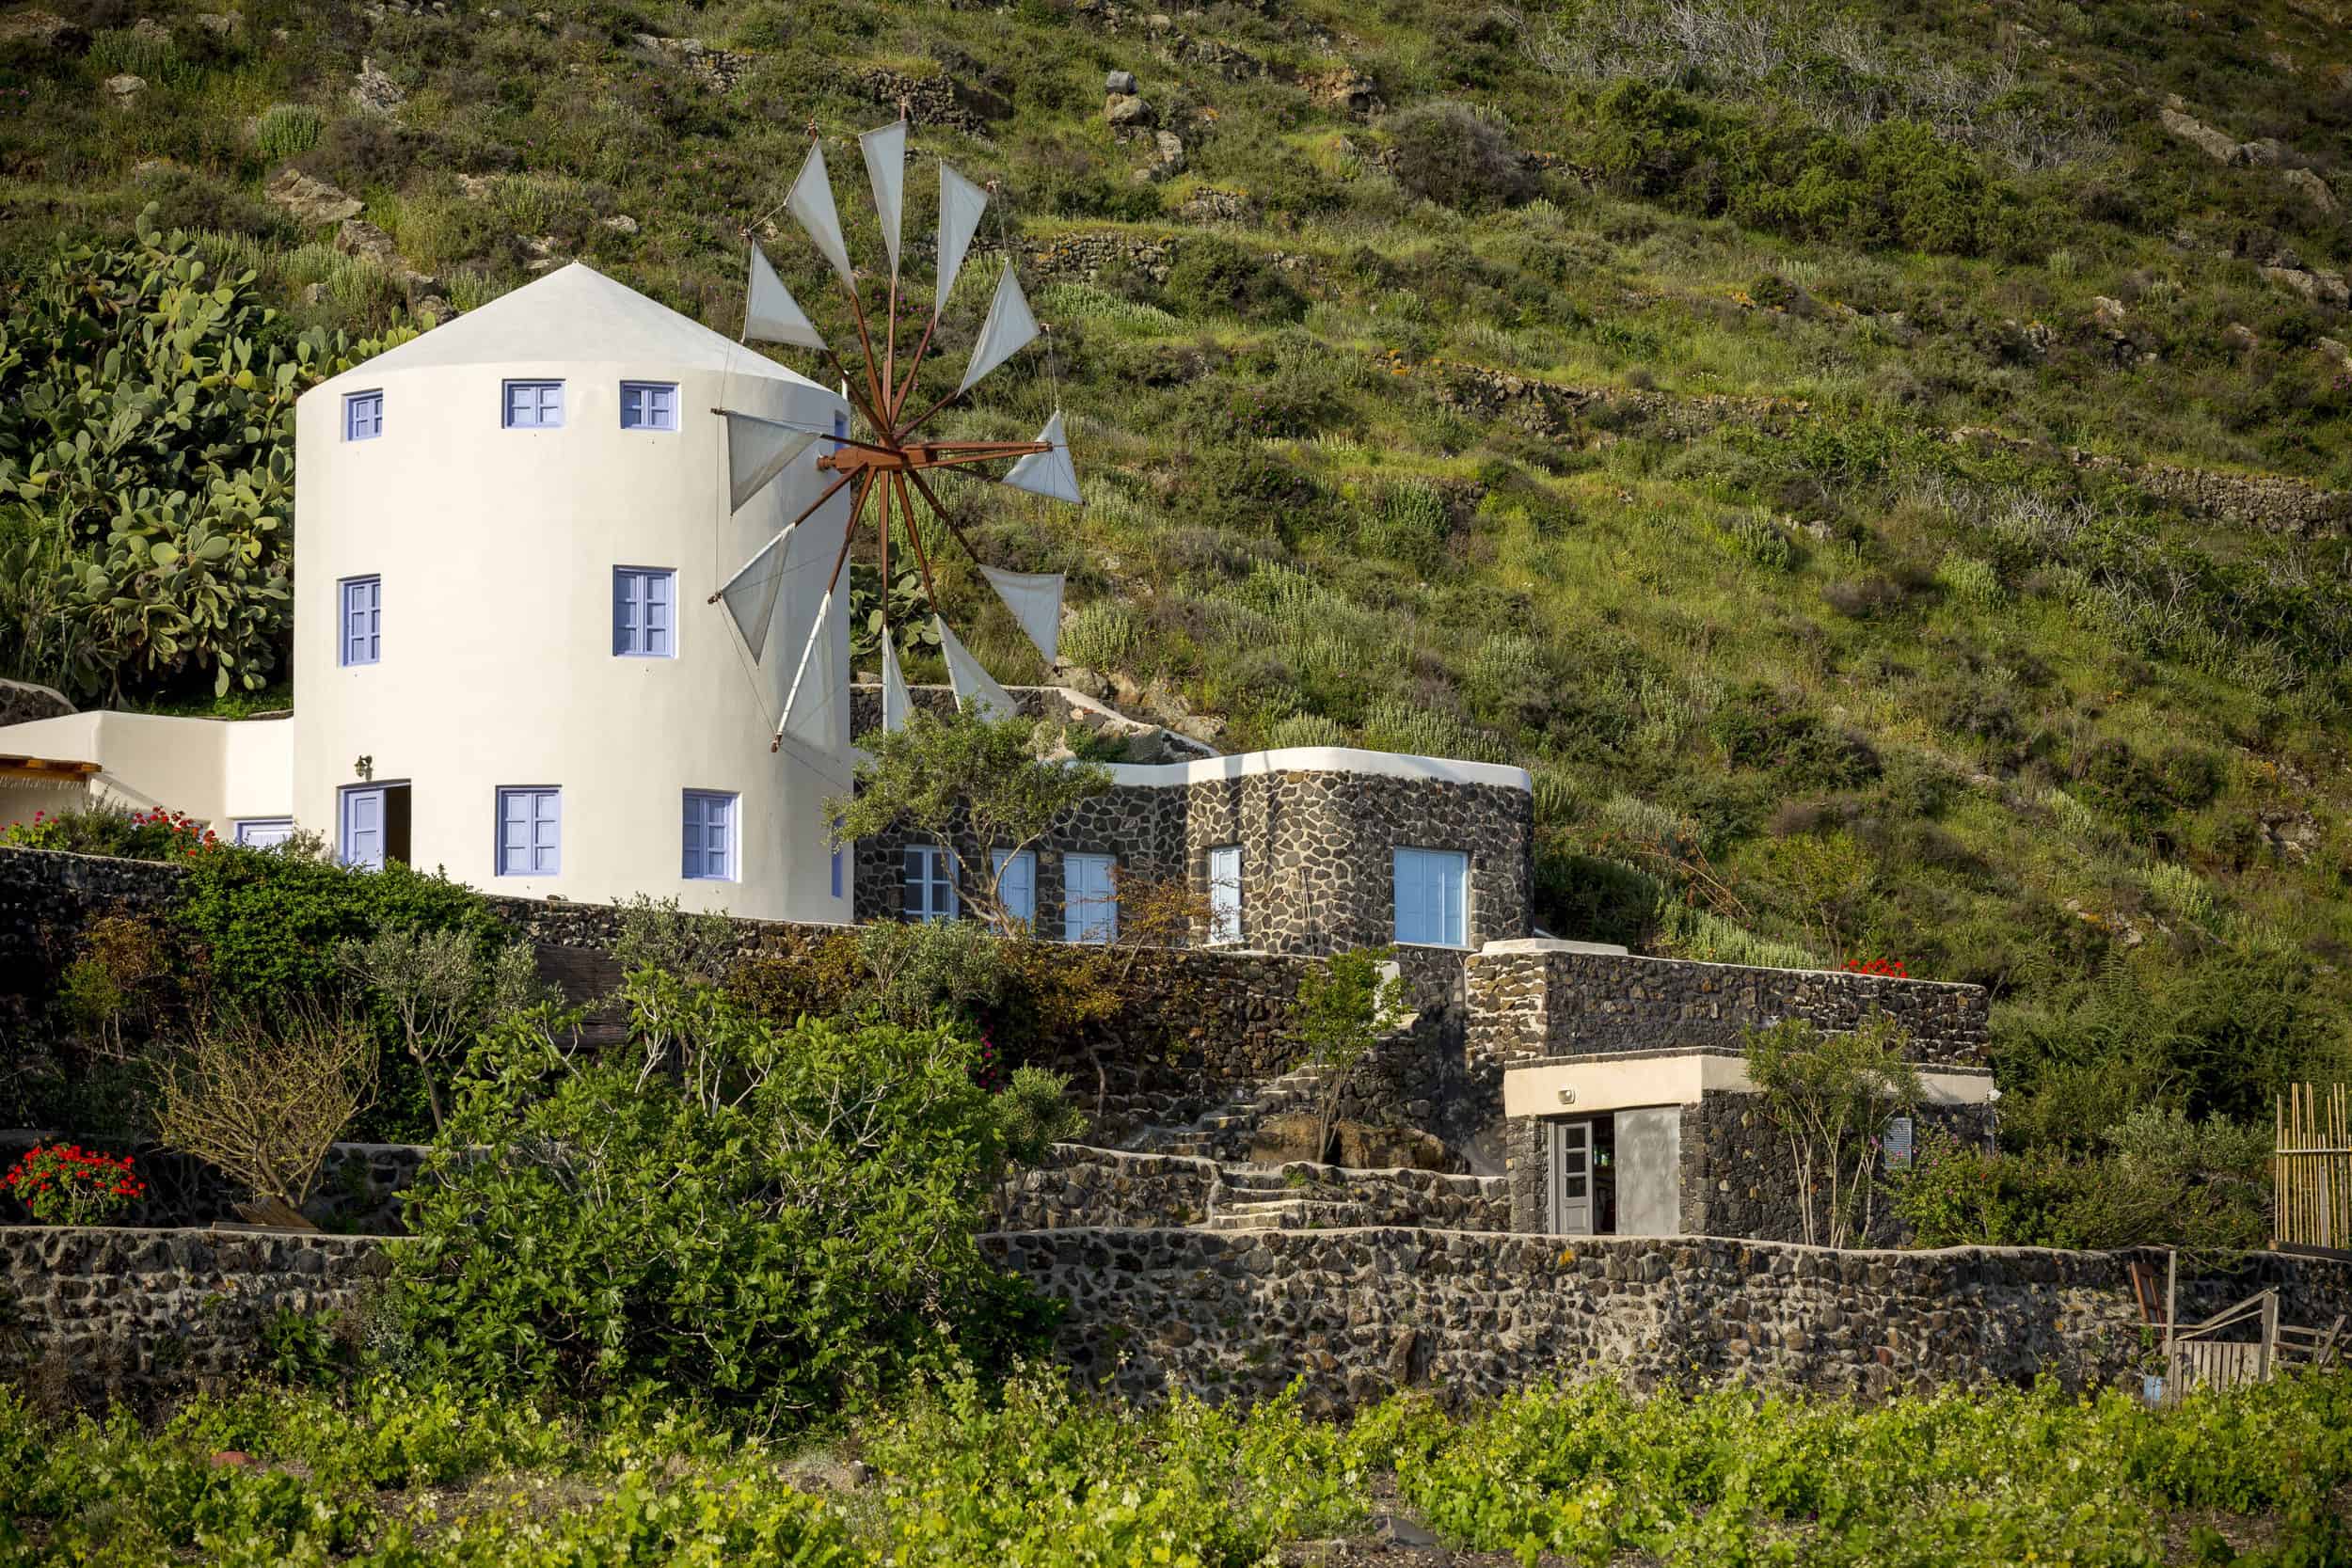 Photograph of the Windmill Villas in Santorini.